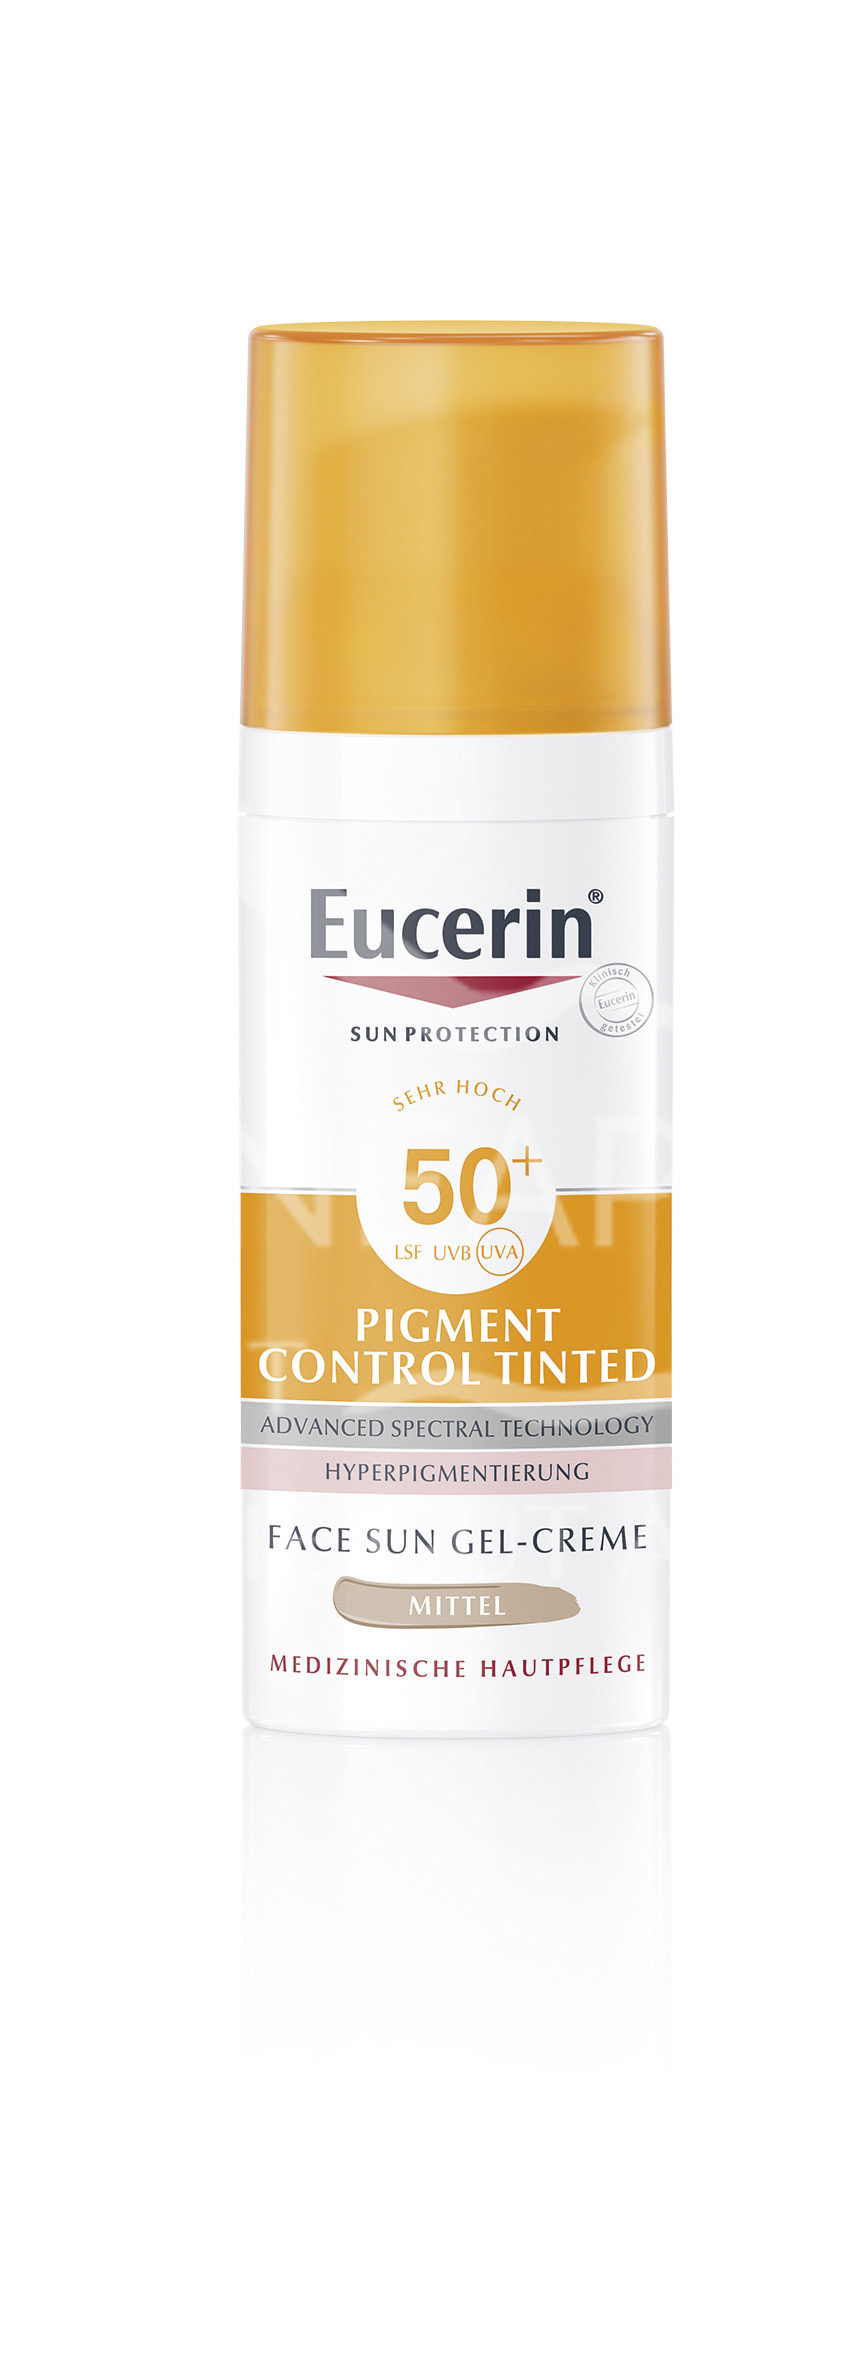 Eucerin® Pigment Control Tinted Face Sun Gel-Creme LSF 50+